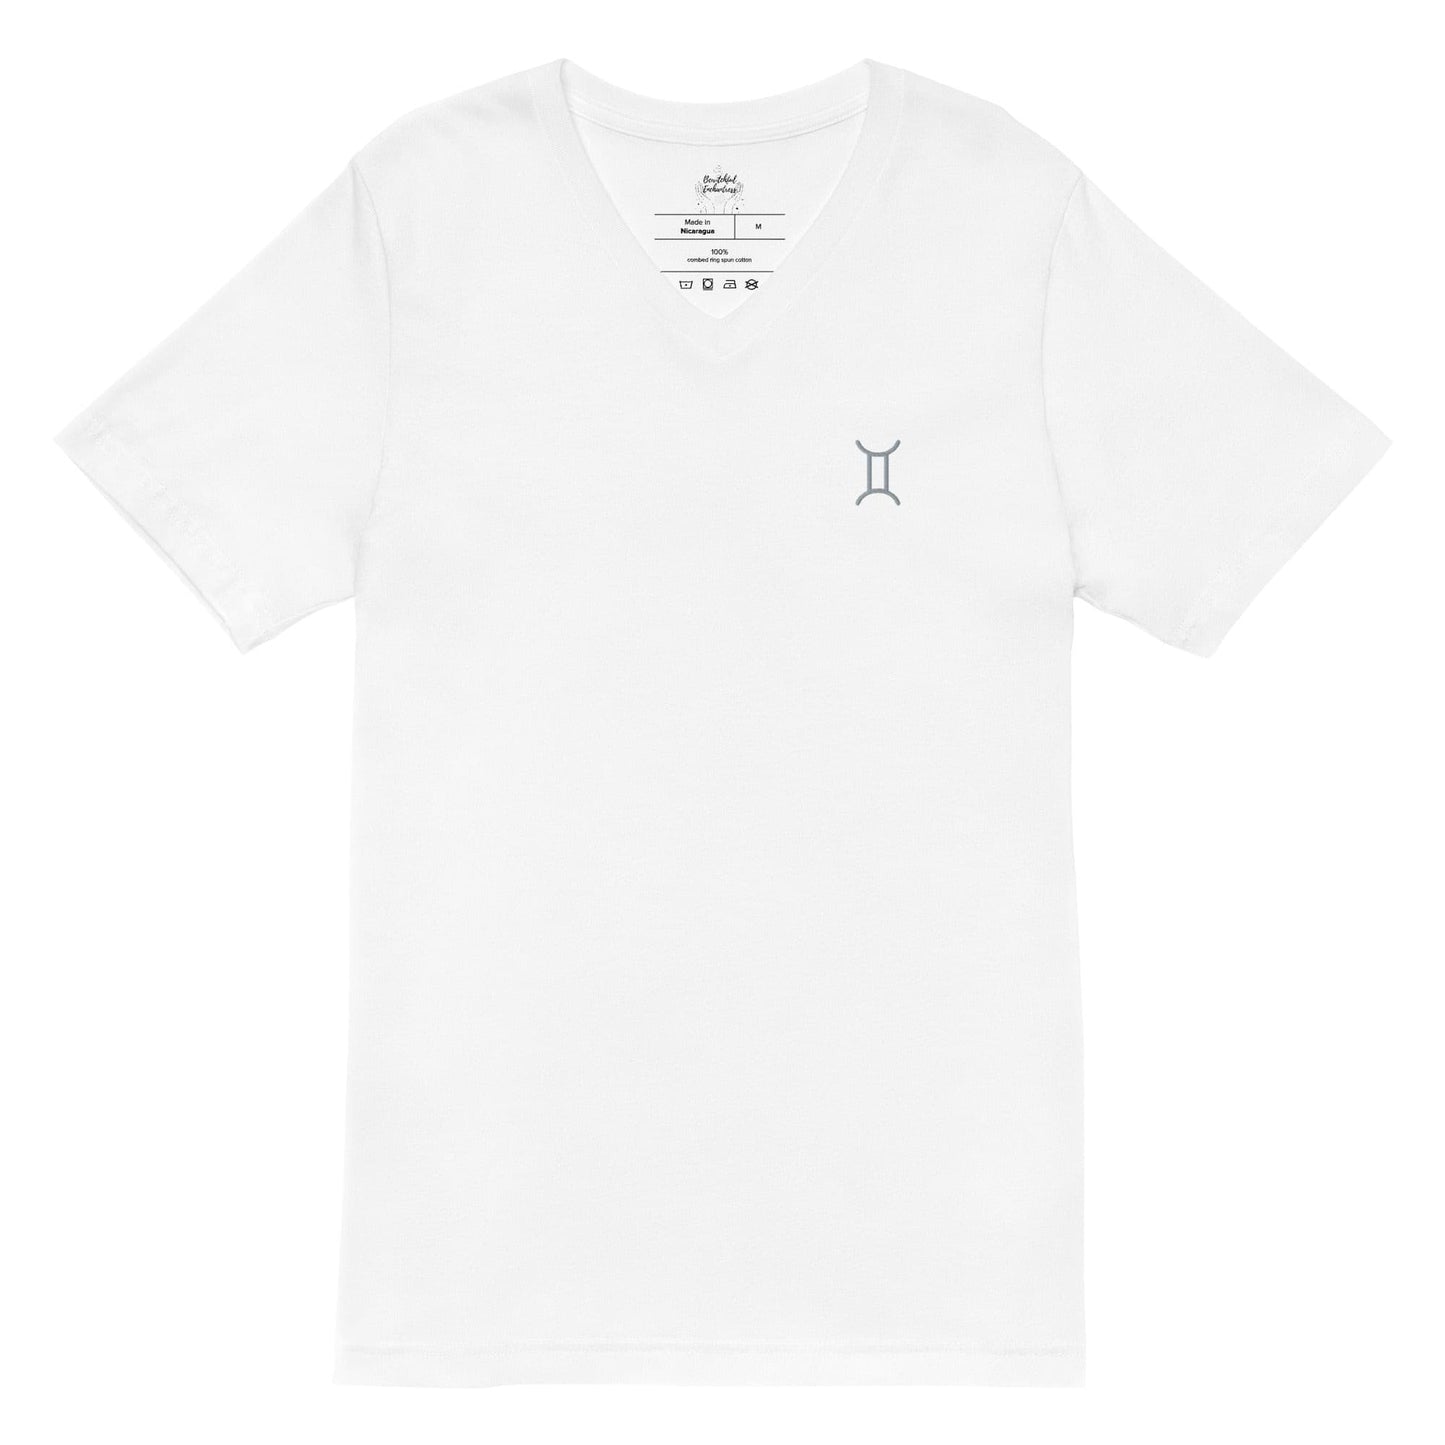 Gemini Unisex Short Sleeve V-Neck T-Shirt.